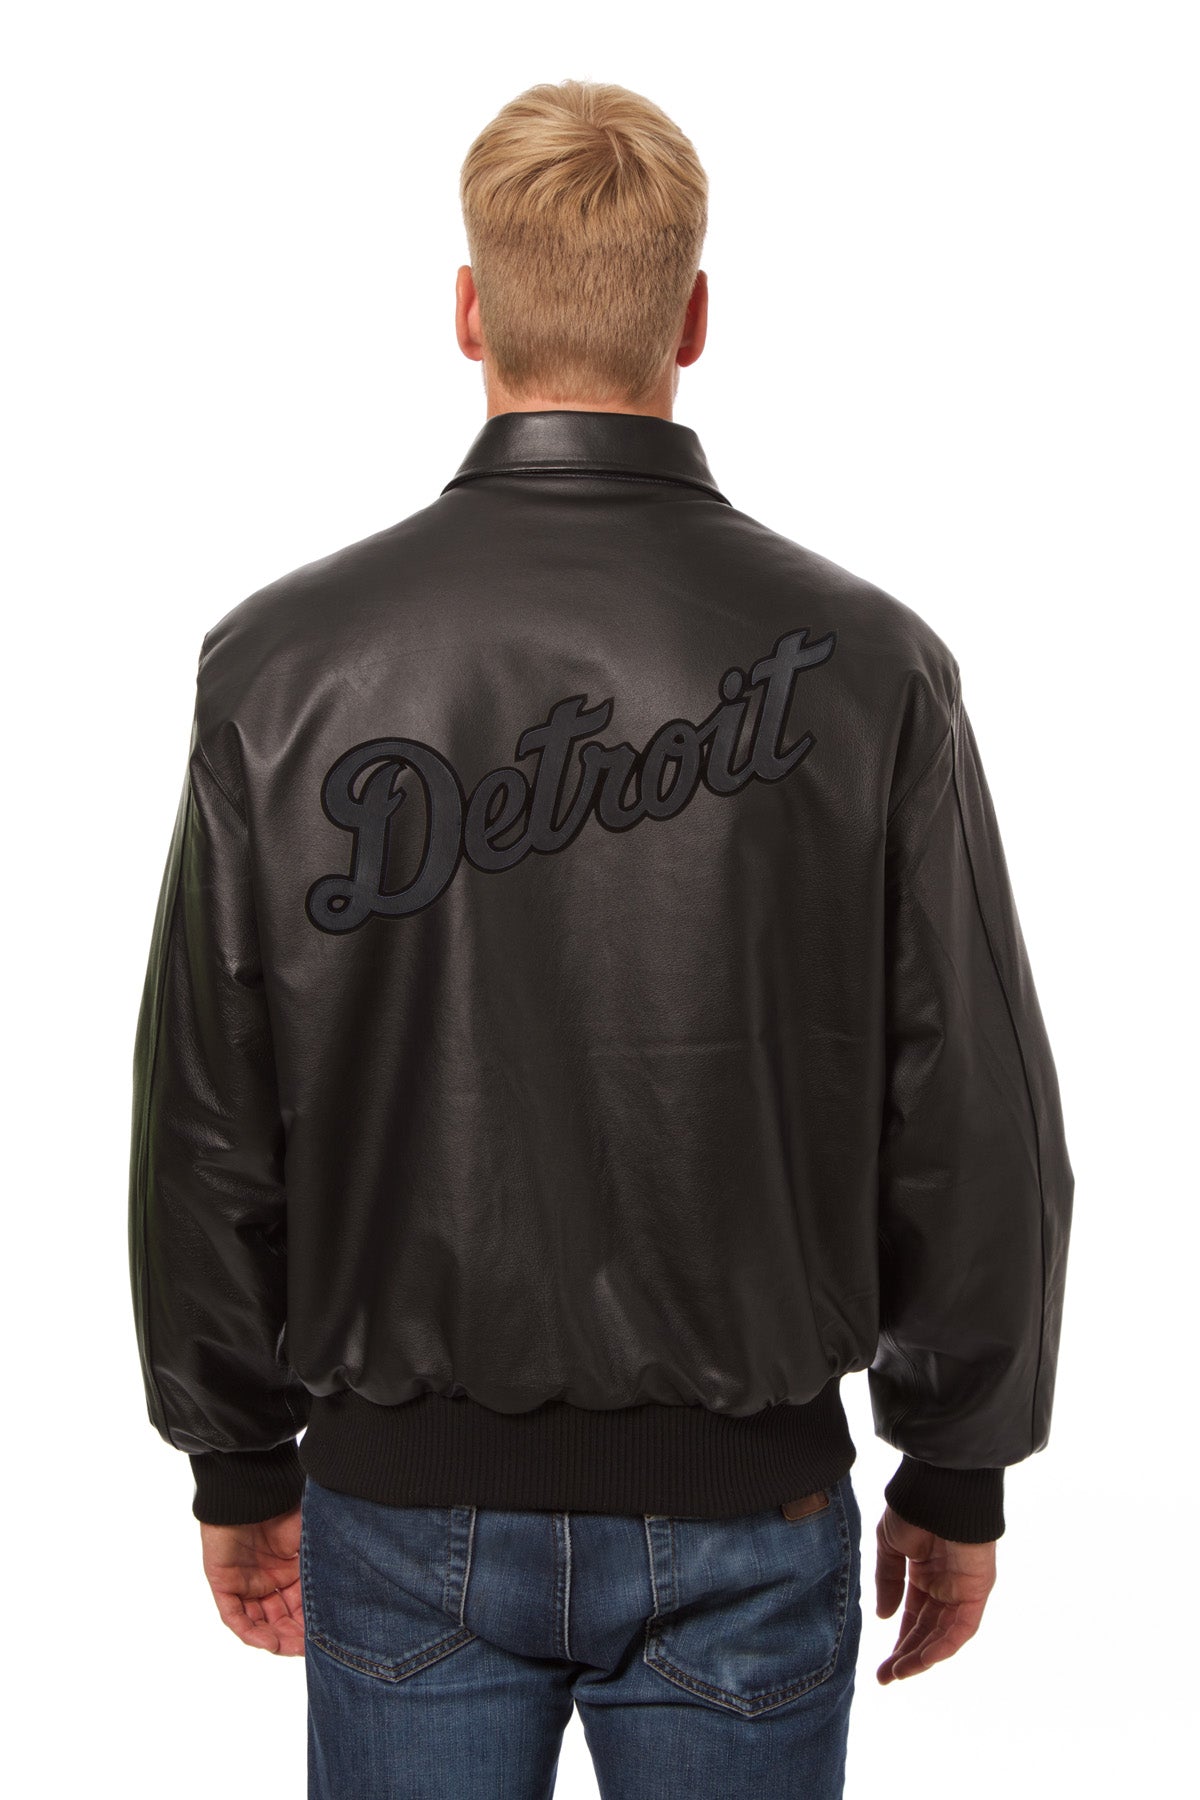 Detroit Tigers Full Leather Jacket - Black/Black | J.H. Sports Jackets